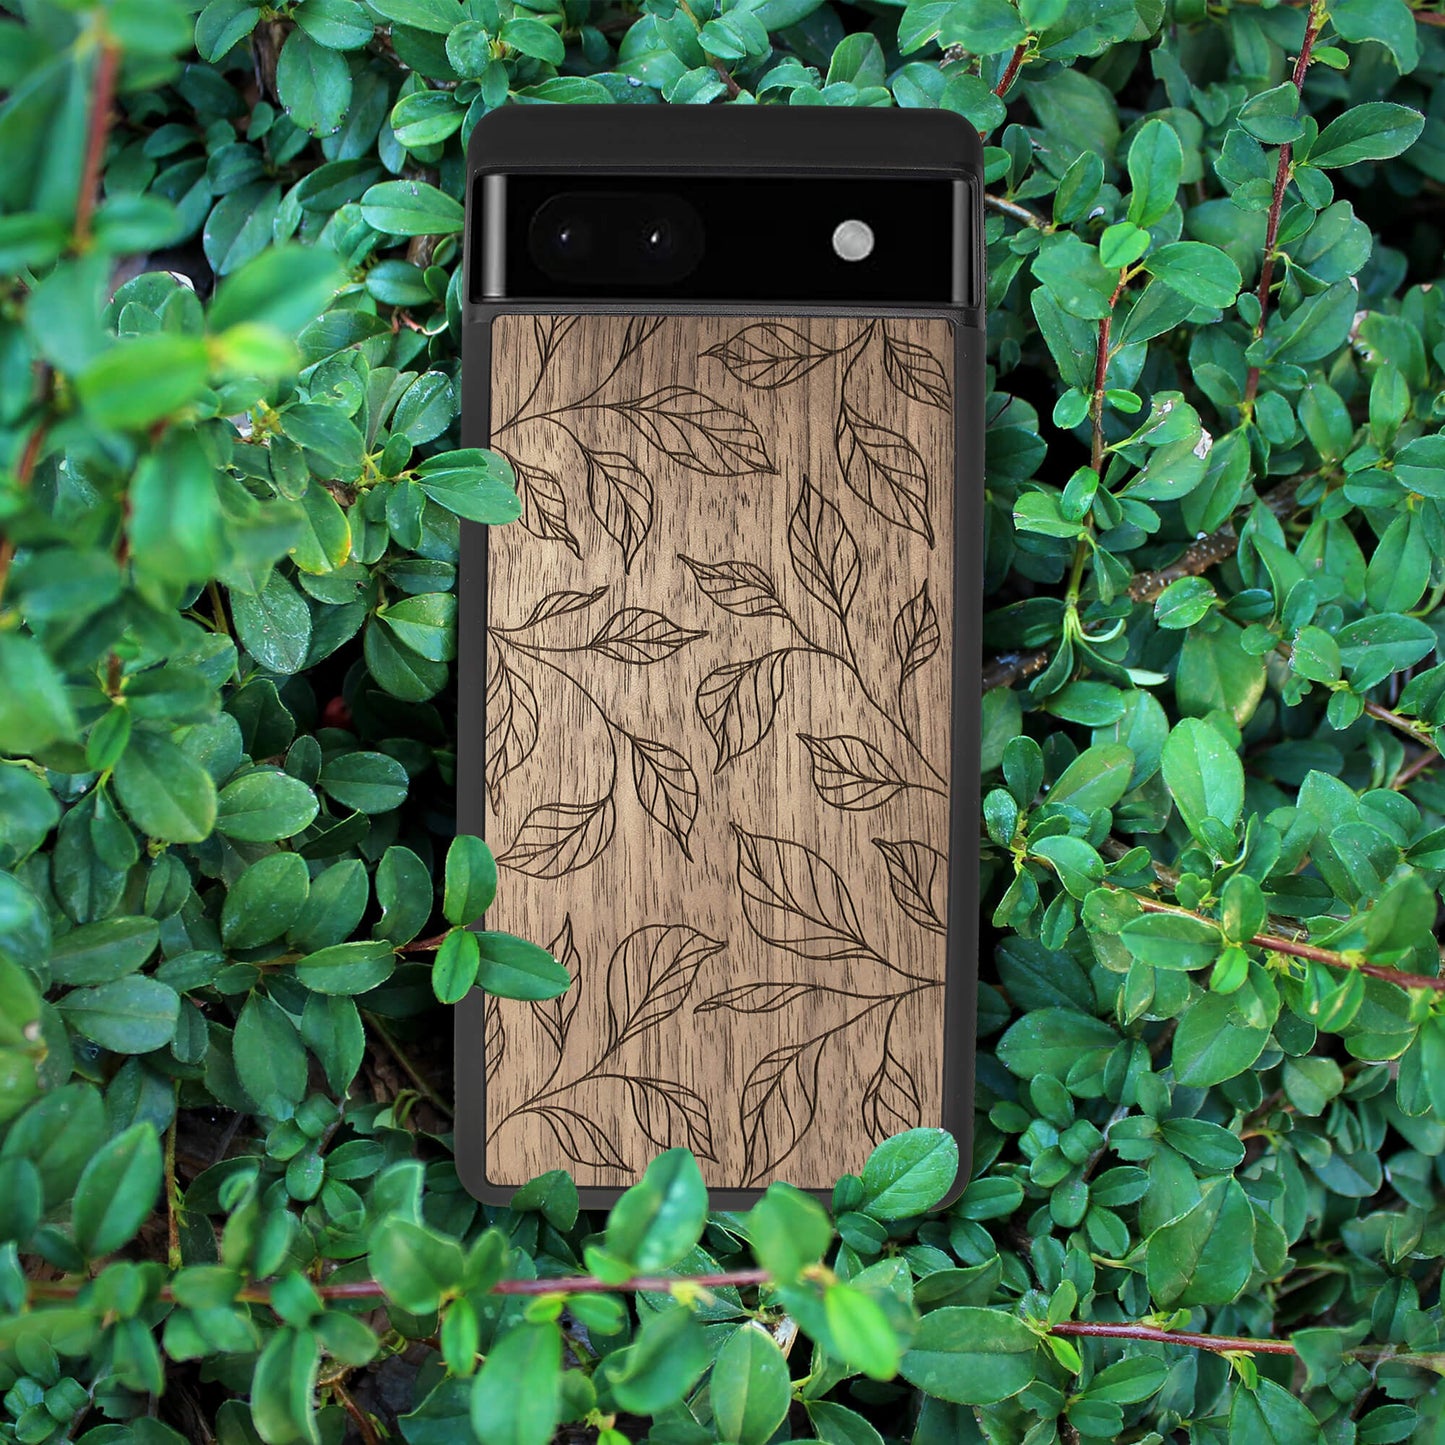 Wood Pixel 3A XL Case Botanical Leaves